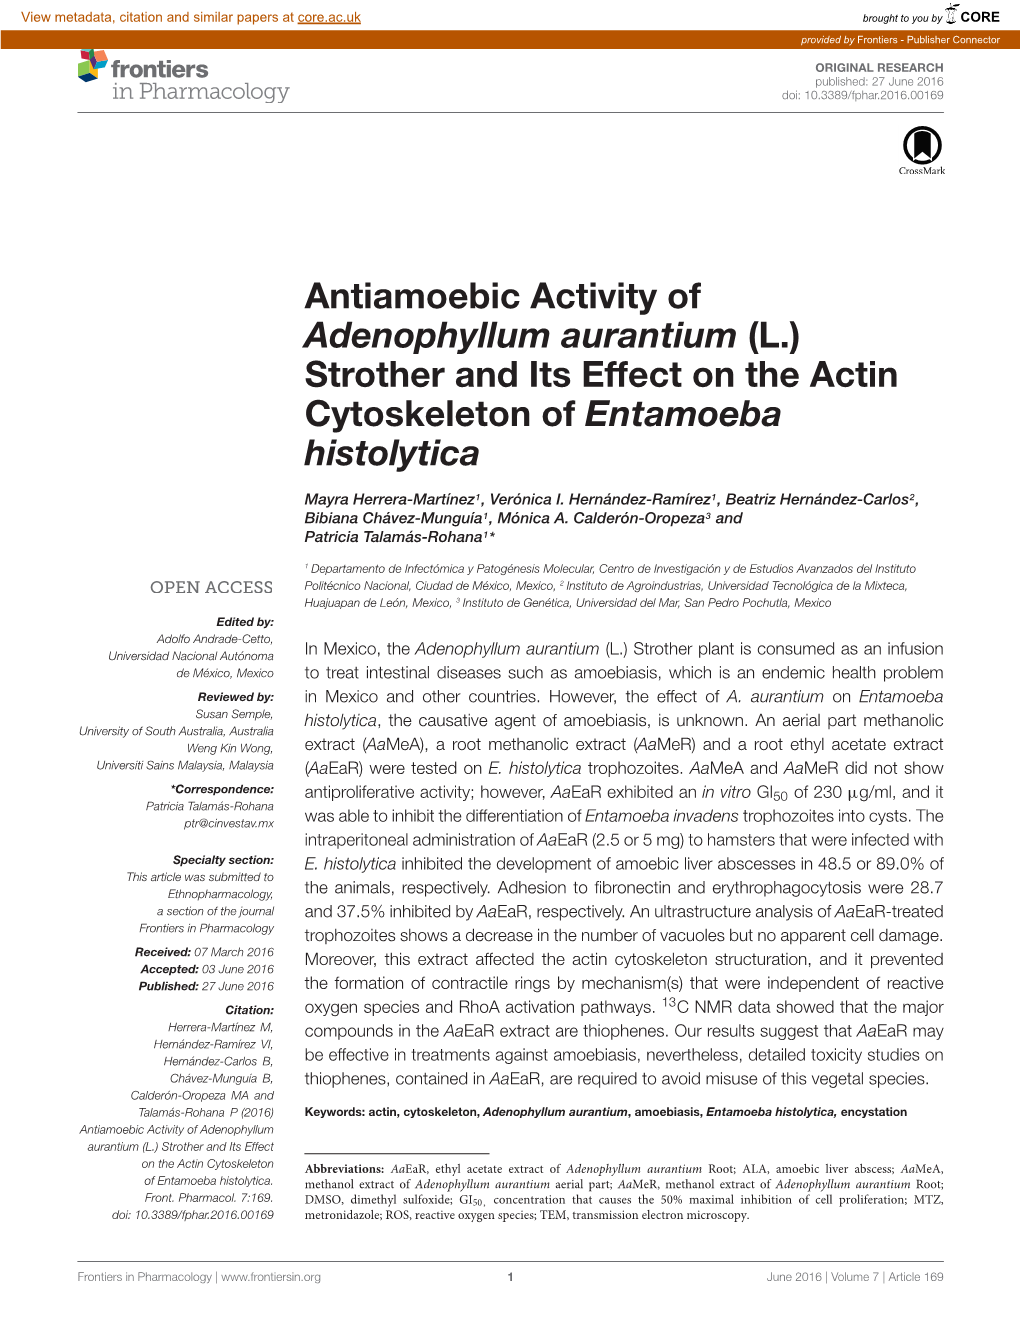 Antiamoebic Activity of Adenophyllum Aurantium (L.) Strother and Its Effect on the Actin Cytoskeleton of Entamoeba Histolytica